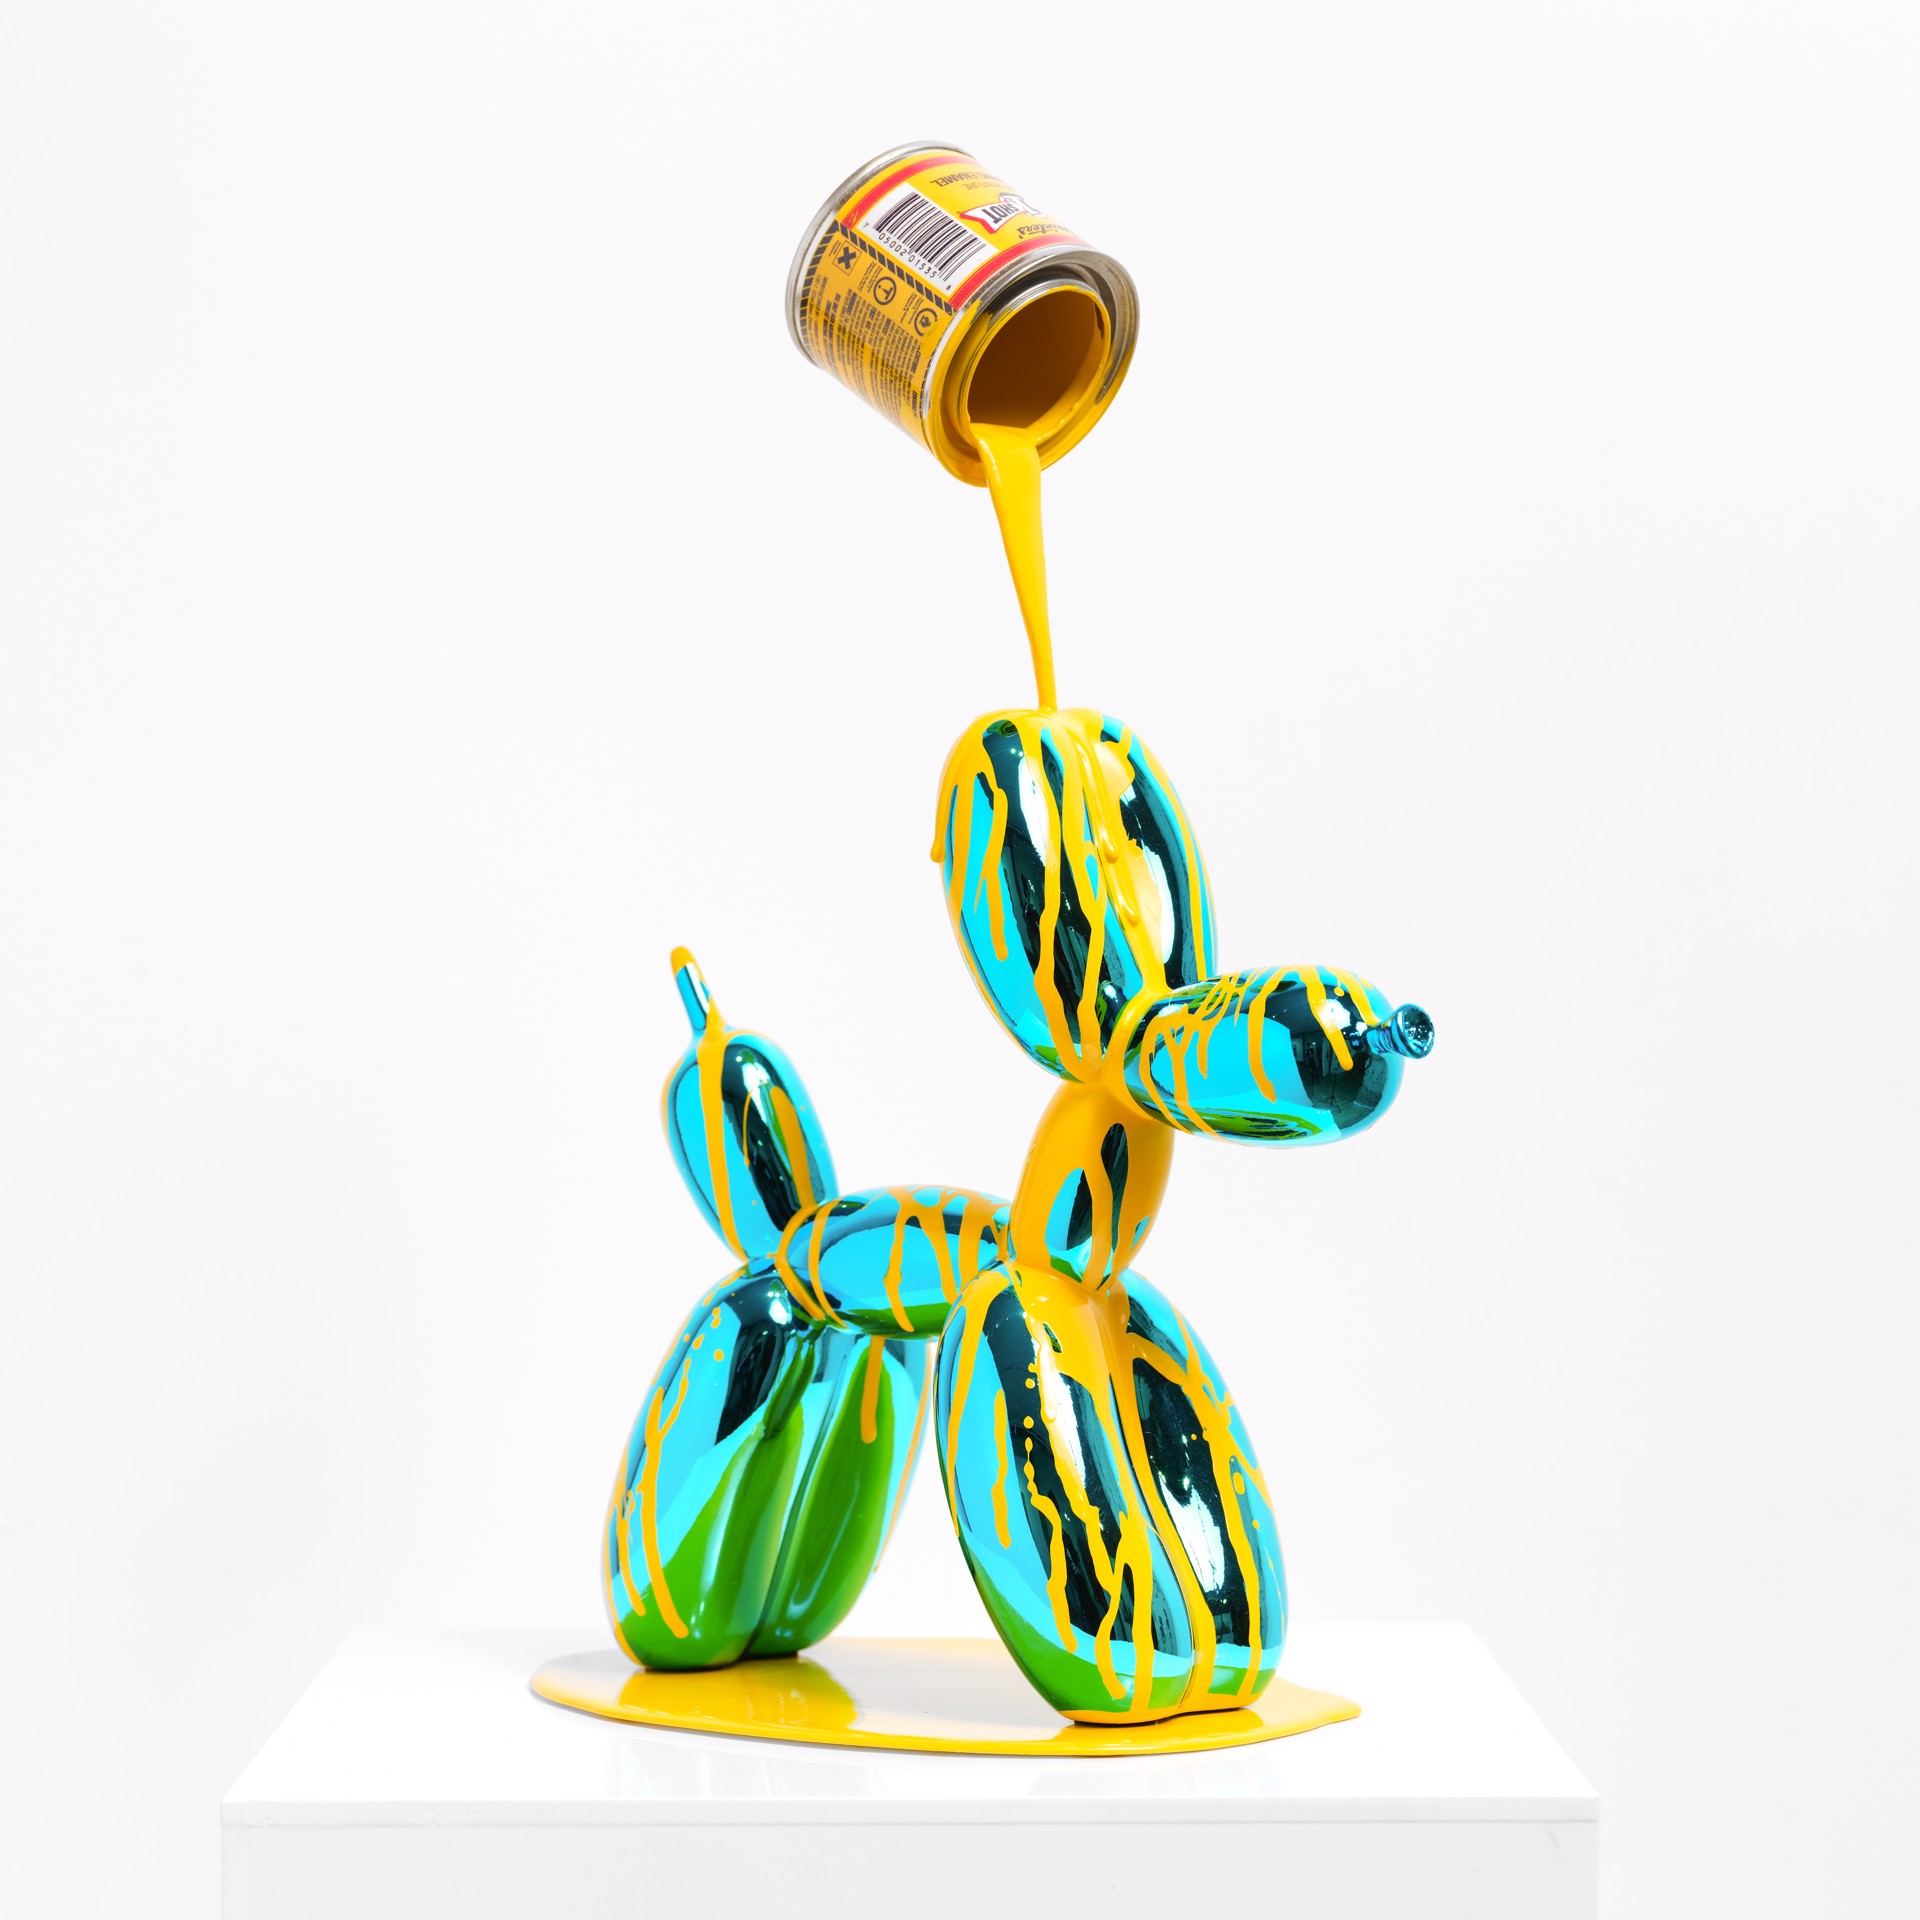 Happy accident - Balloon dog - Blue and yellow by Joe Suzuki